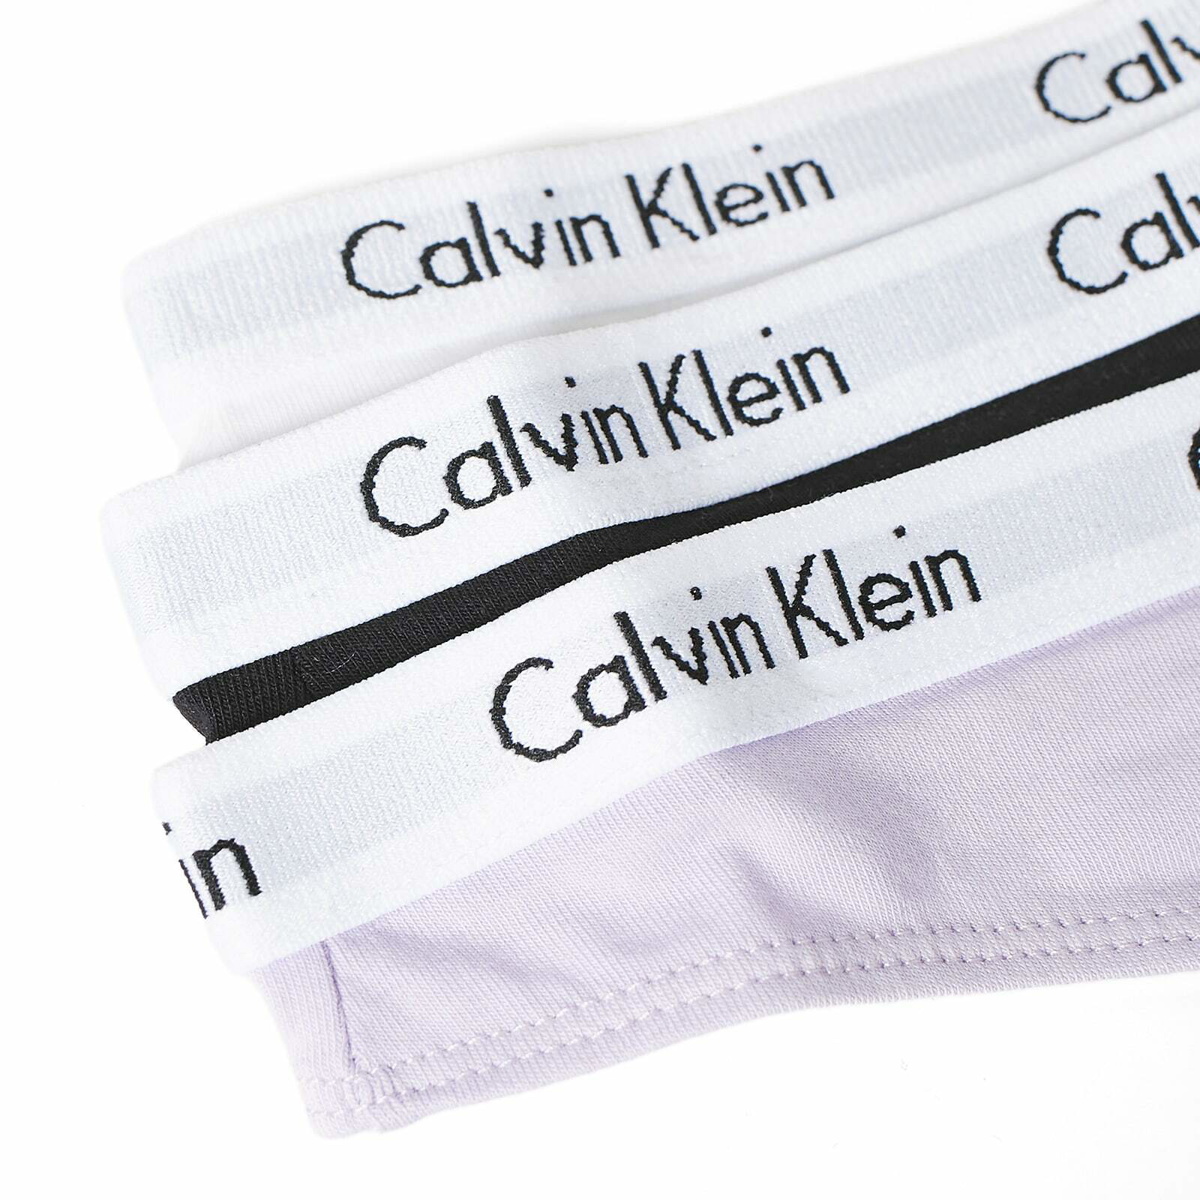 Calvin Klein Ck Thong 3 Pack in Black